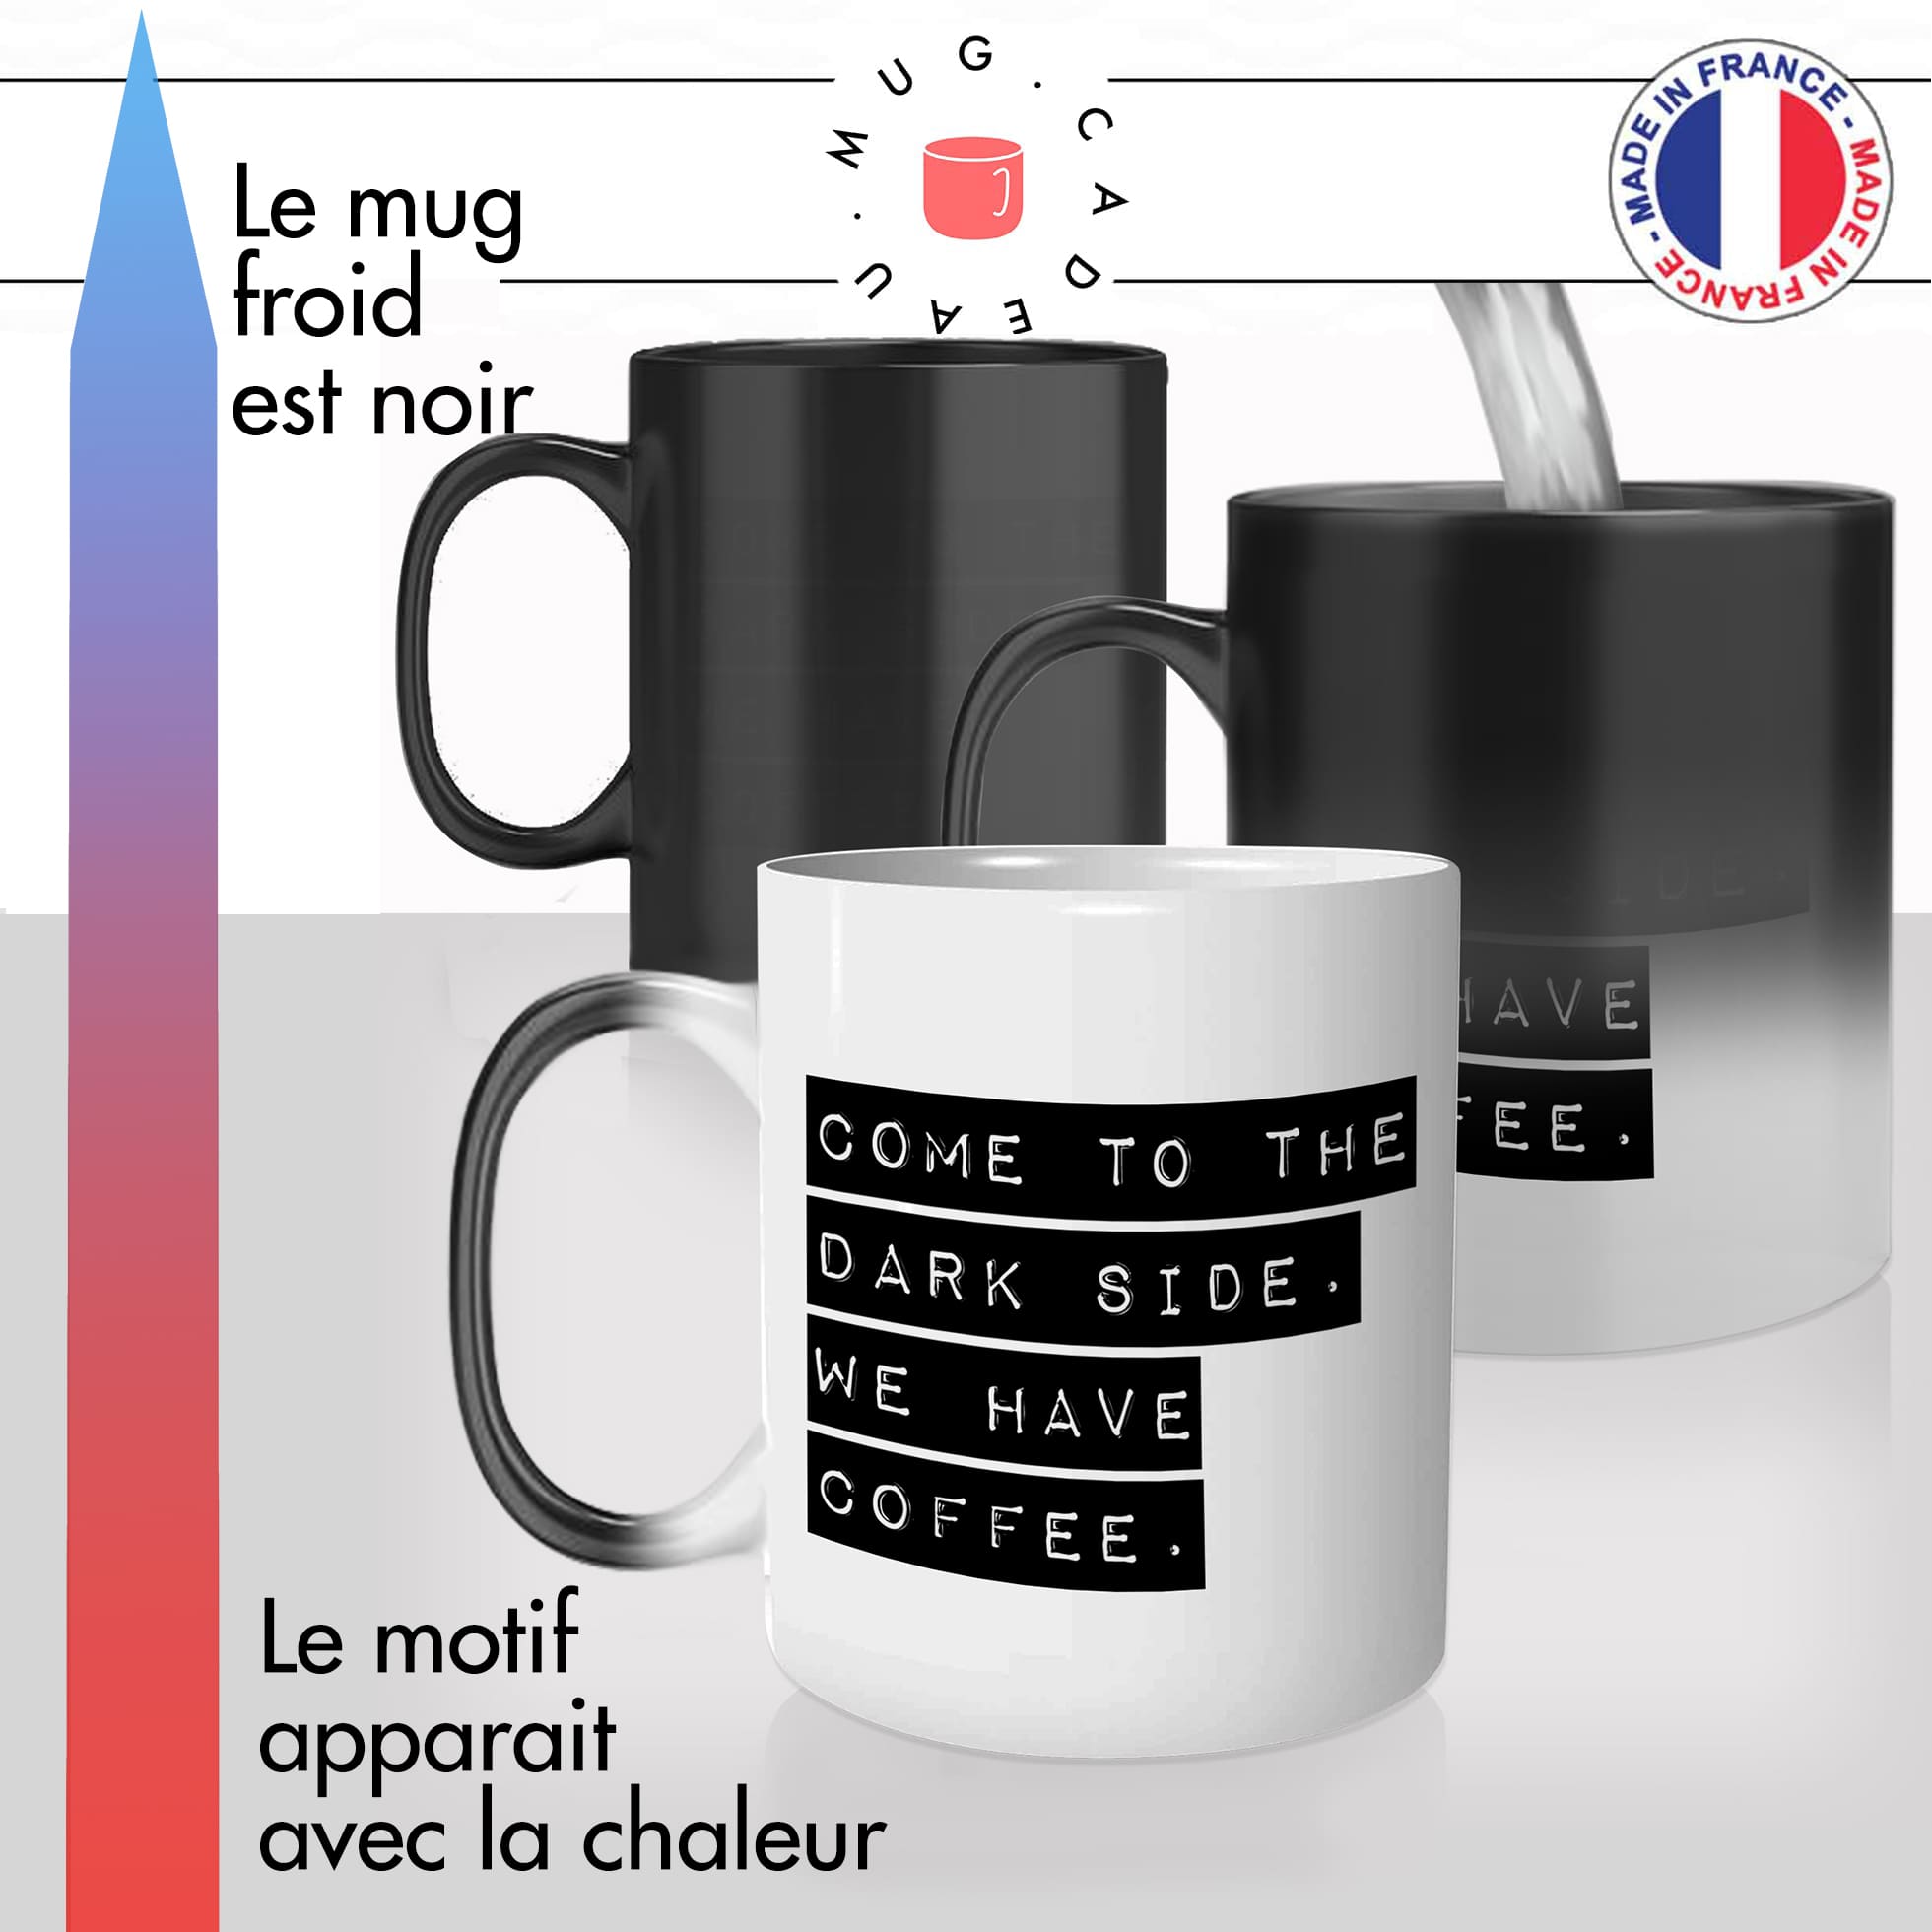 mug magique thermoreactif thermochauffant personnalisé dark side coffee café idée cadeau fun